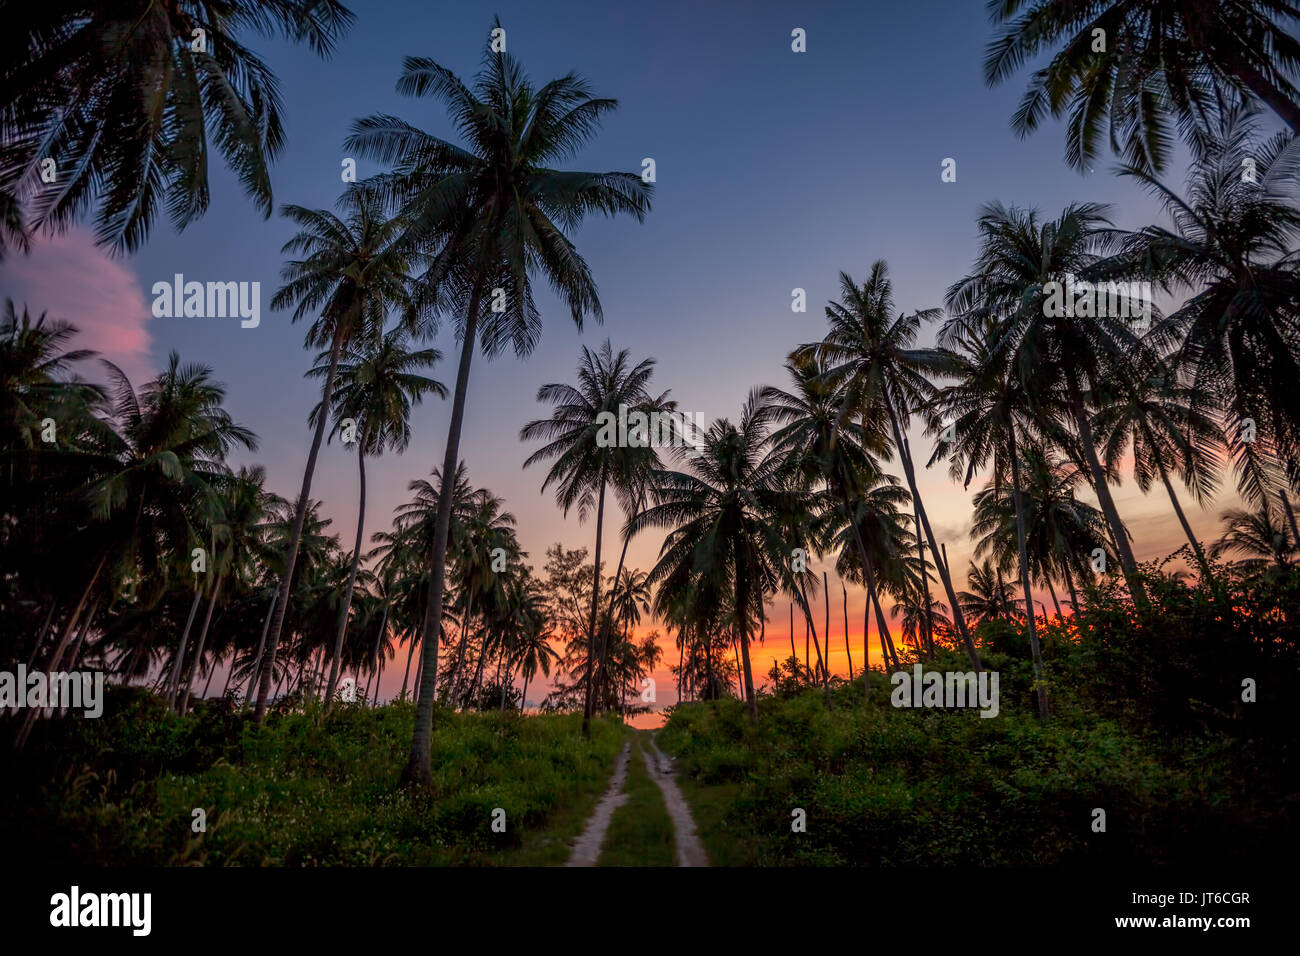 Palm trees silhouettes during a colorful tropical sunset at Nathon beach, Laem Yai, Koh Samui, Thailand Stock Photo